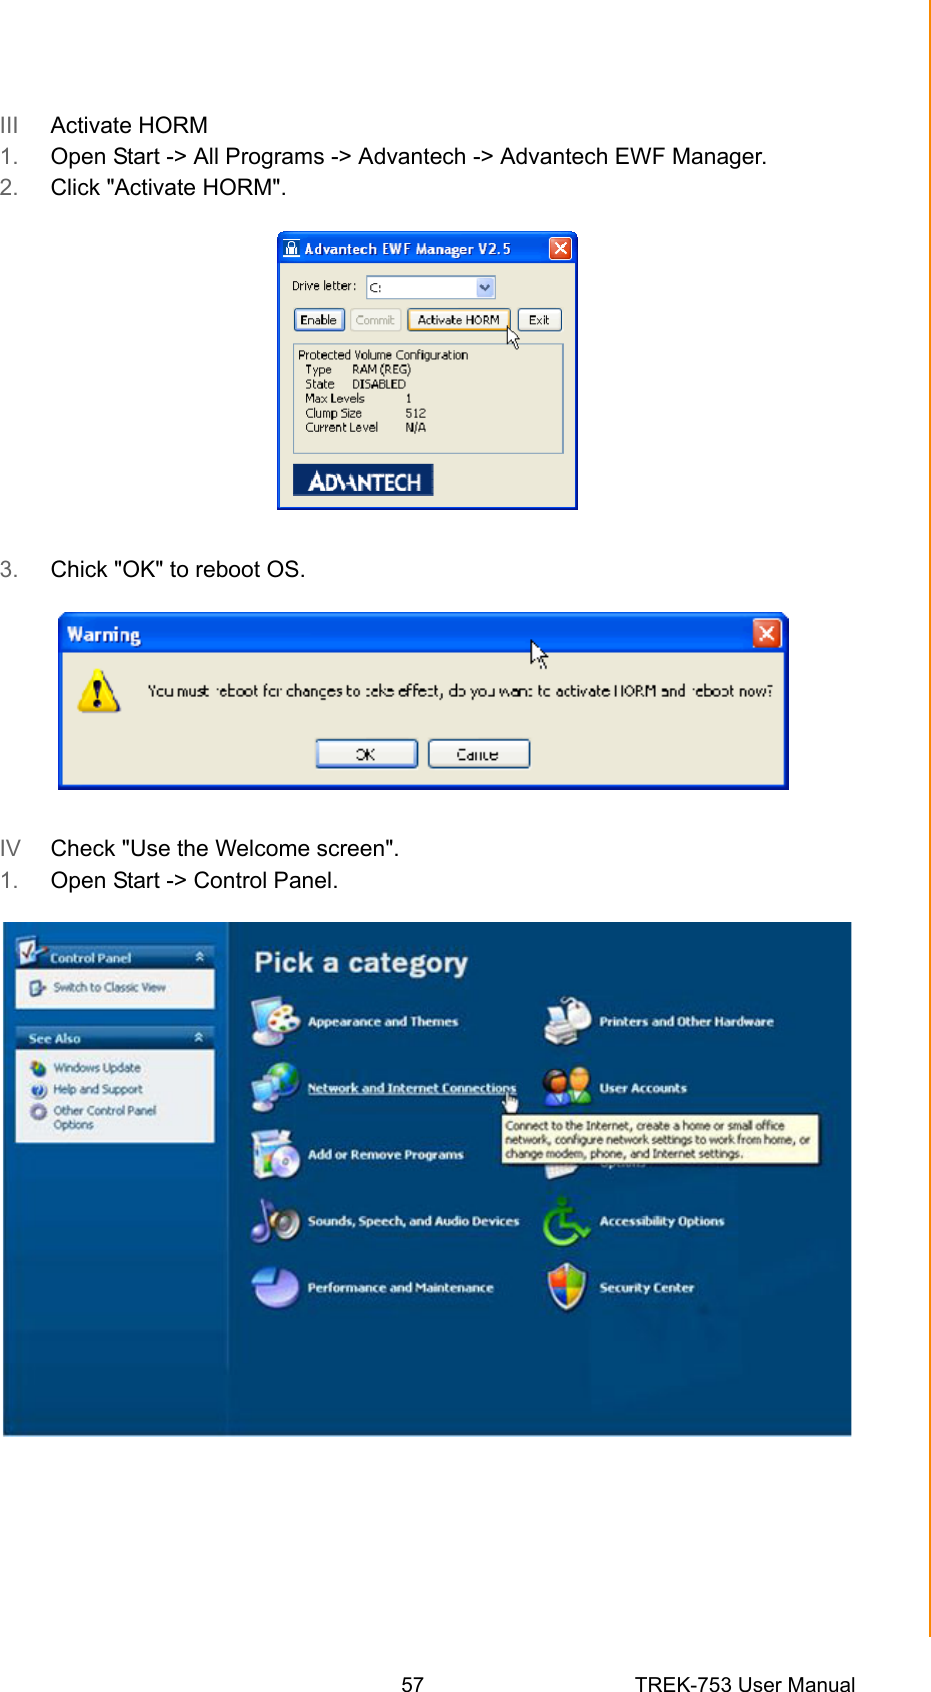 57 TREK-753 User ManualAppendix B EWF(Enhanced Write Filter)Manager SOPIII  Activate HORM1. Open Start -&gt; All Programs -&gt; Advantech -&gt; Advantech EWF Manager.2. Click &quot;Activate HORM&quot;.3. Chick &quot;OK&quot; to reboot OS.IV  Check &quot;Use the Welcome screen&quot;.1. Open Start -&gt; Control Panel. 